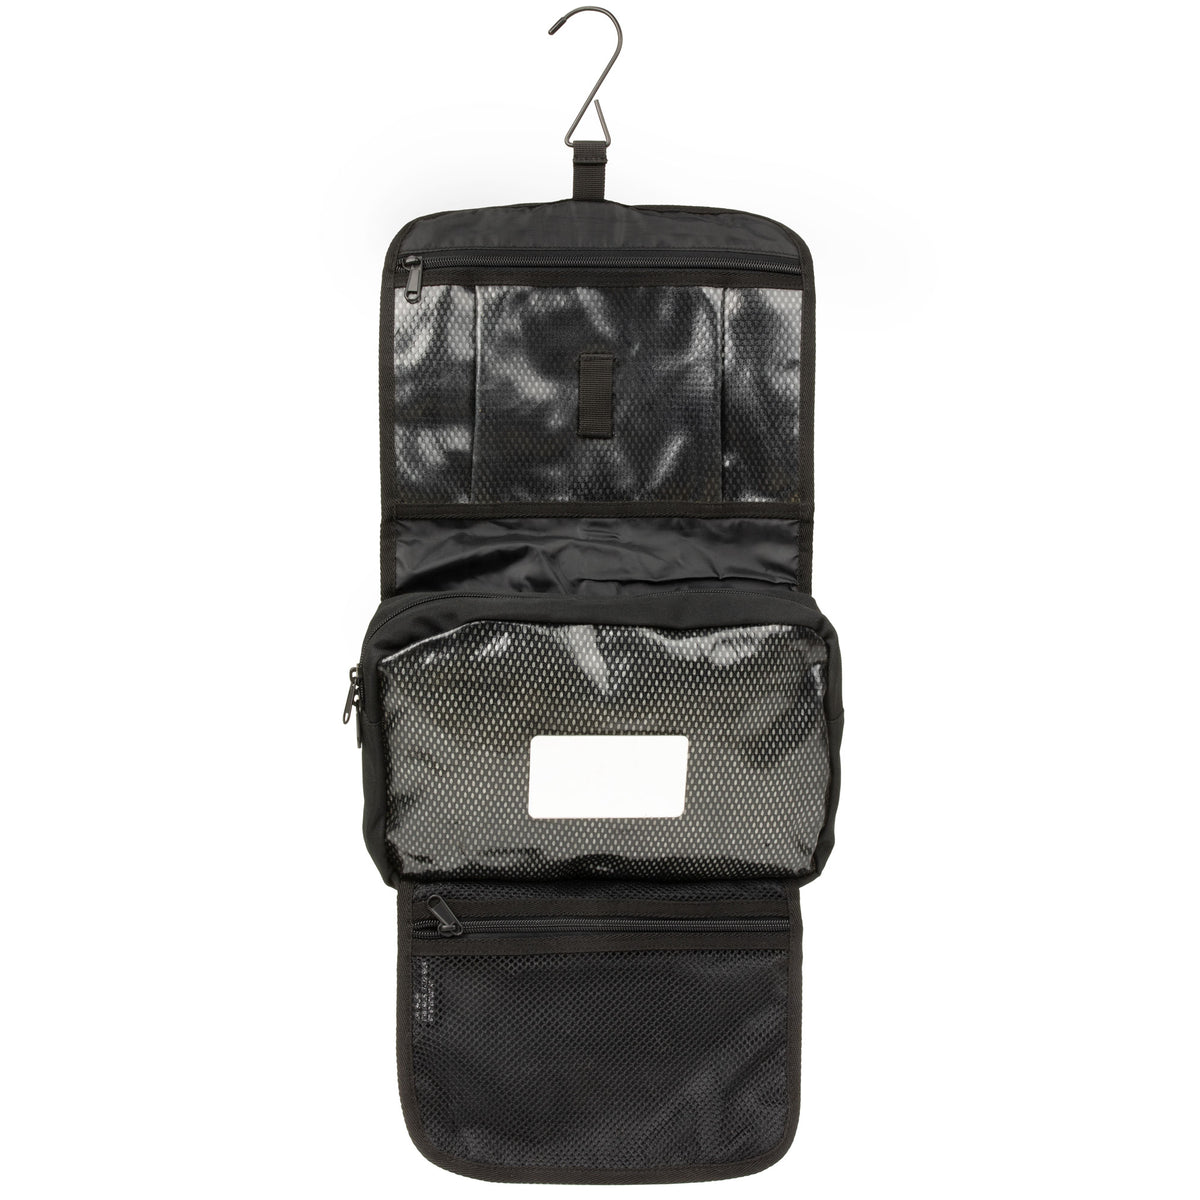 Dutch Army Black Toiletry Bag With Mirror